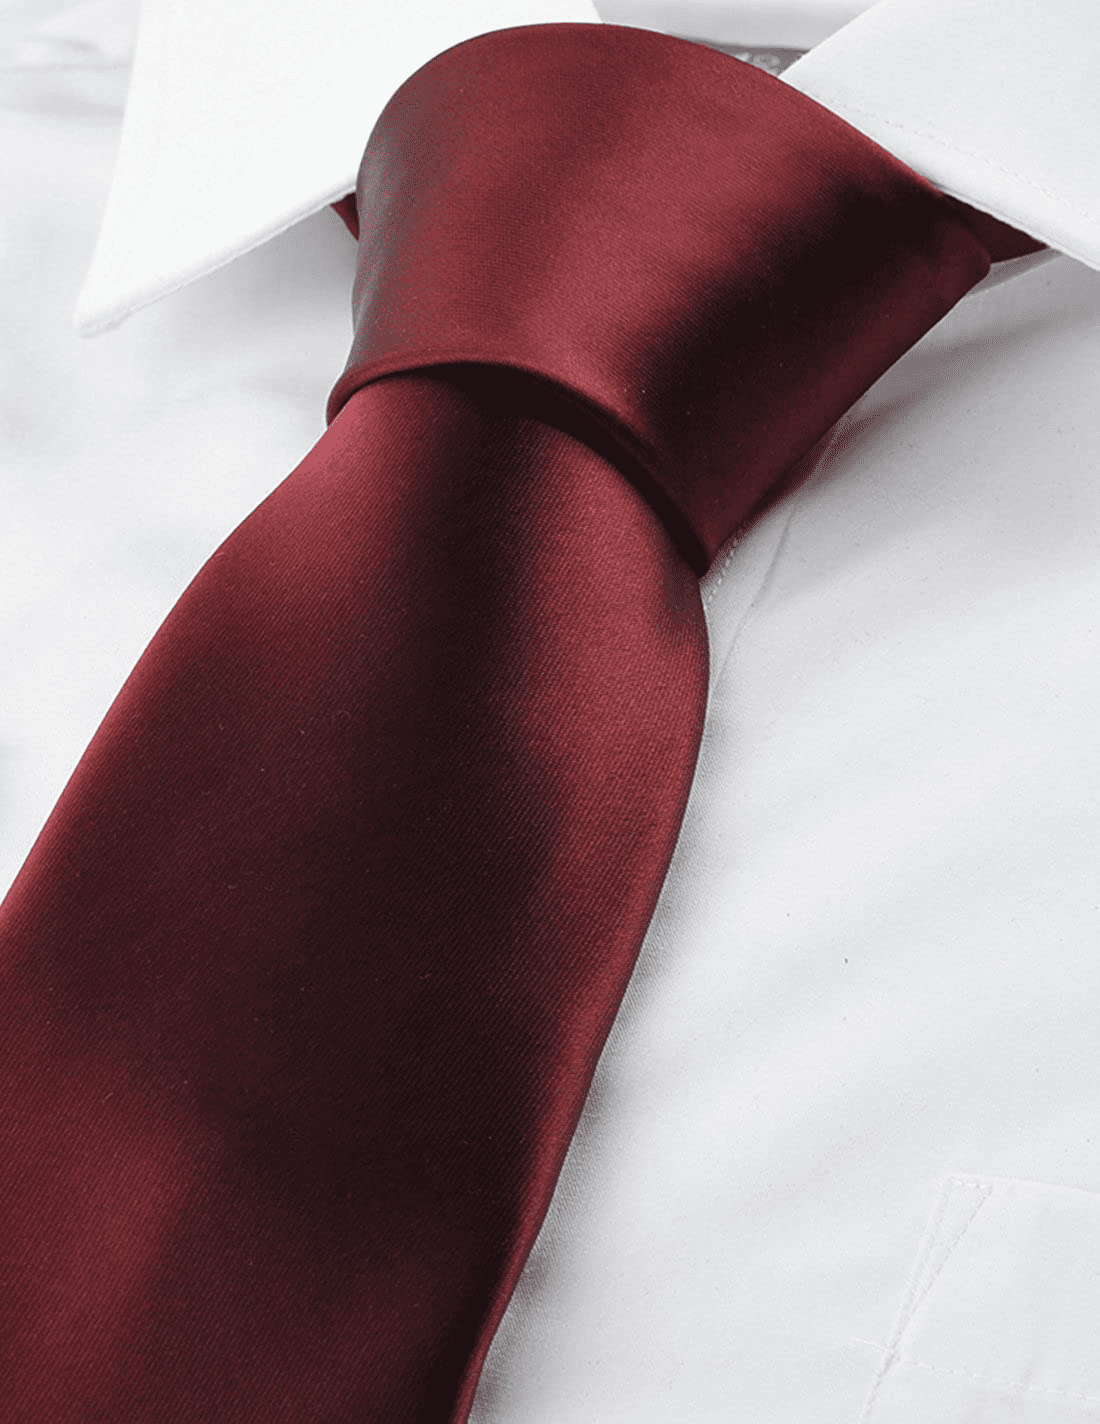 Details about    Mens Ties Solid Satin Tie Pure Solid Color Necktie 